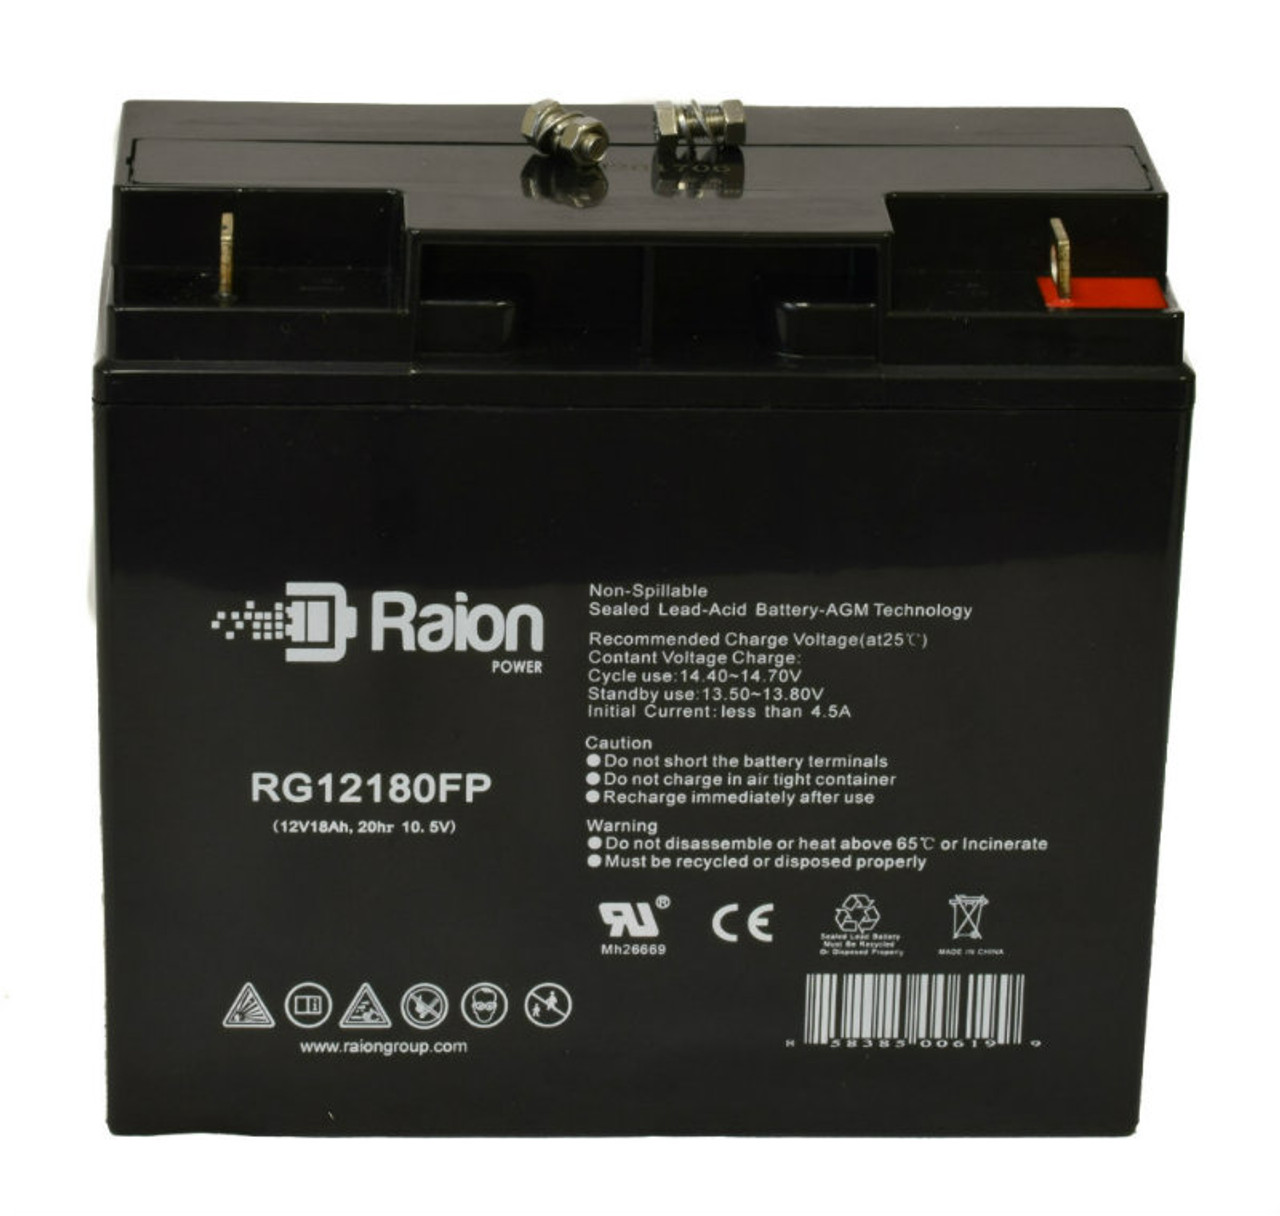 Raion Power RG12180FP 12V 18Ah Lead Acid Battery for Drive Medical Spitfire DST 3-Wheel